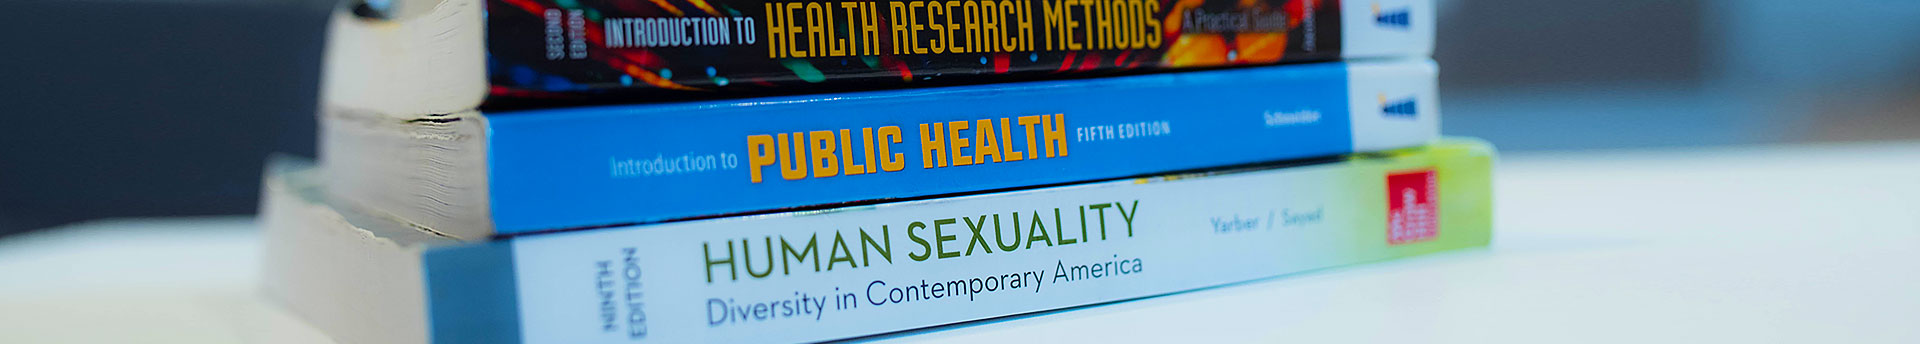 Public-health-banner1.jpg